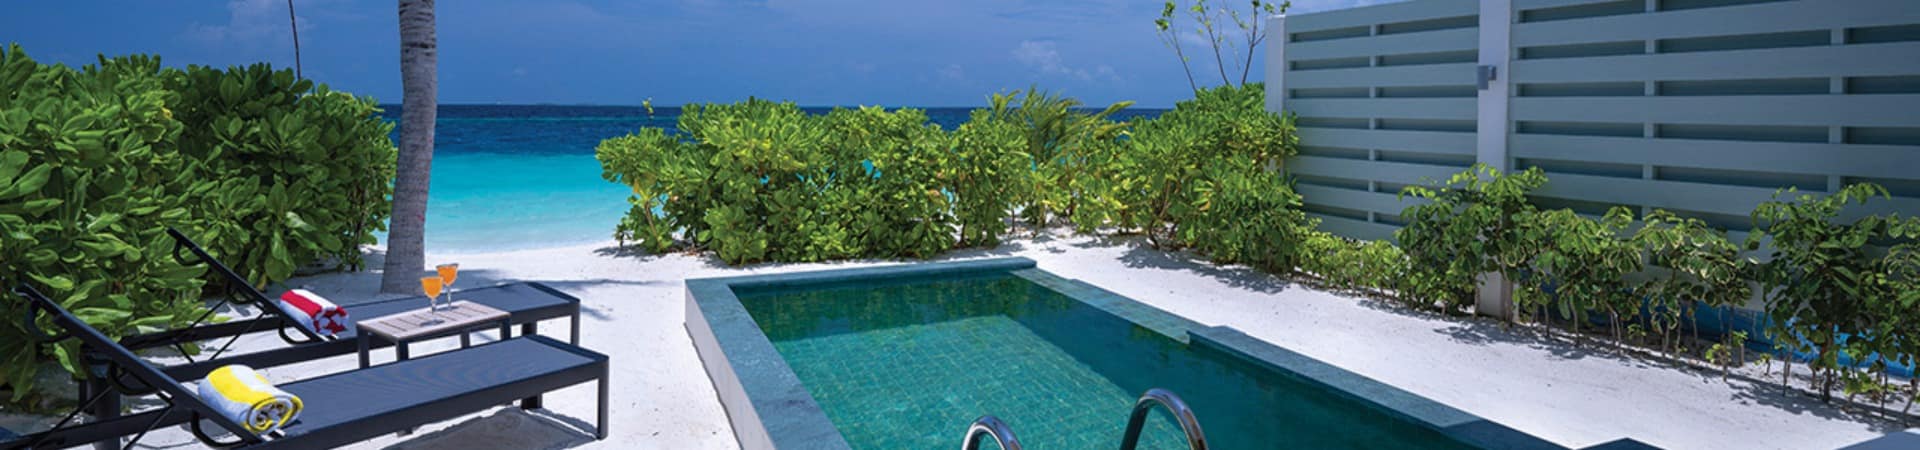 Oblu select lobigili deck sunnest beach pool villa